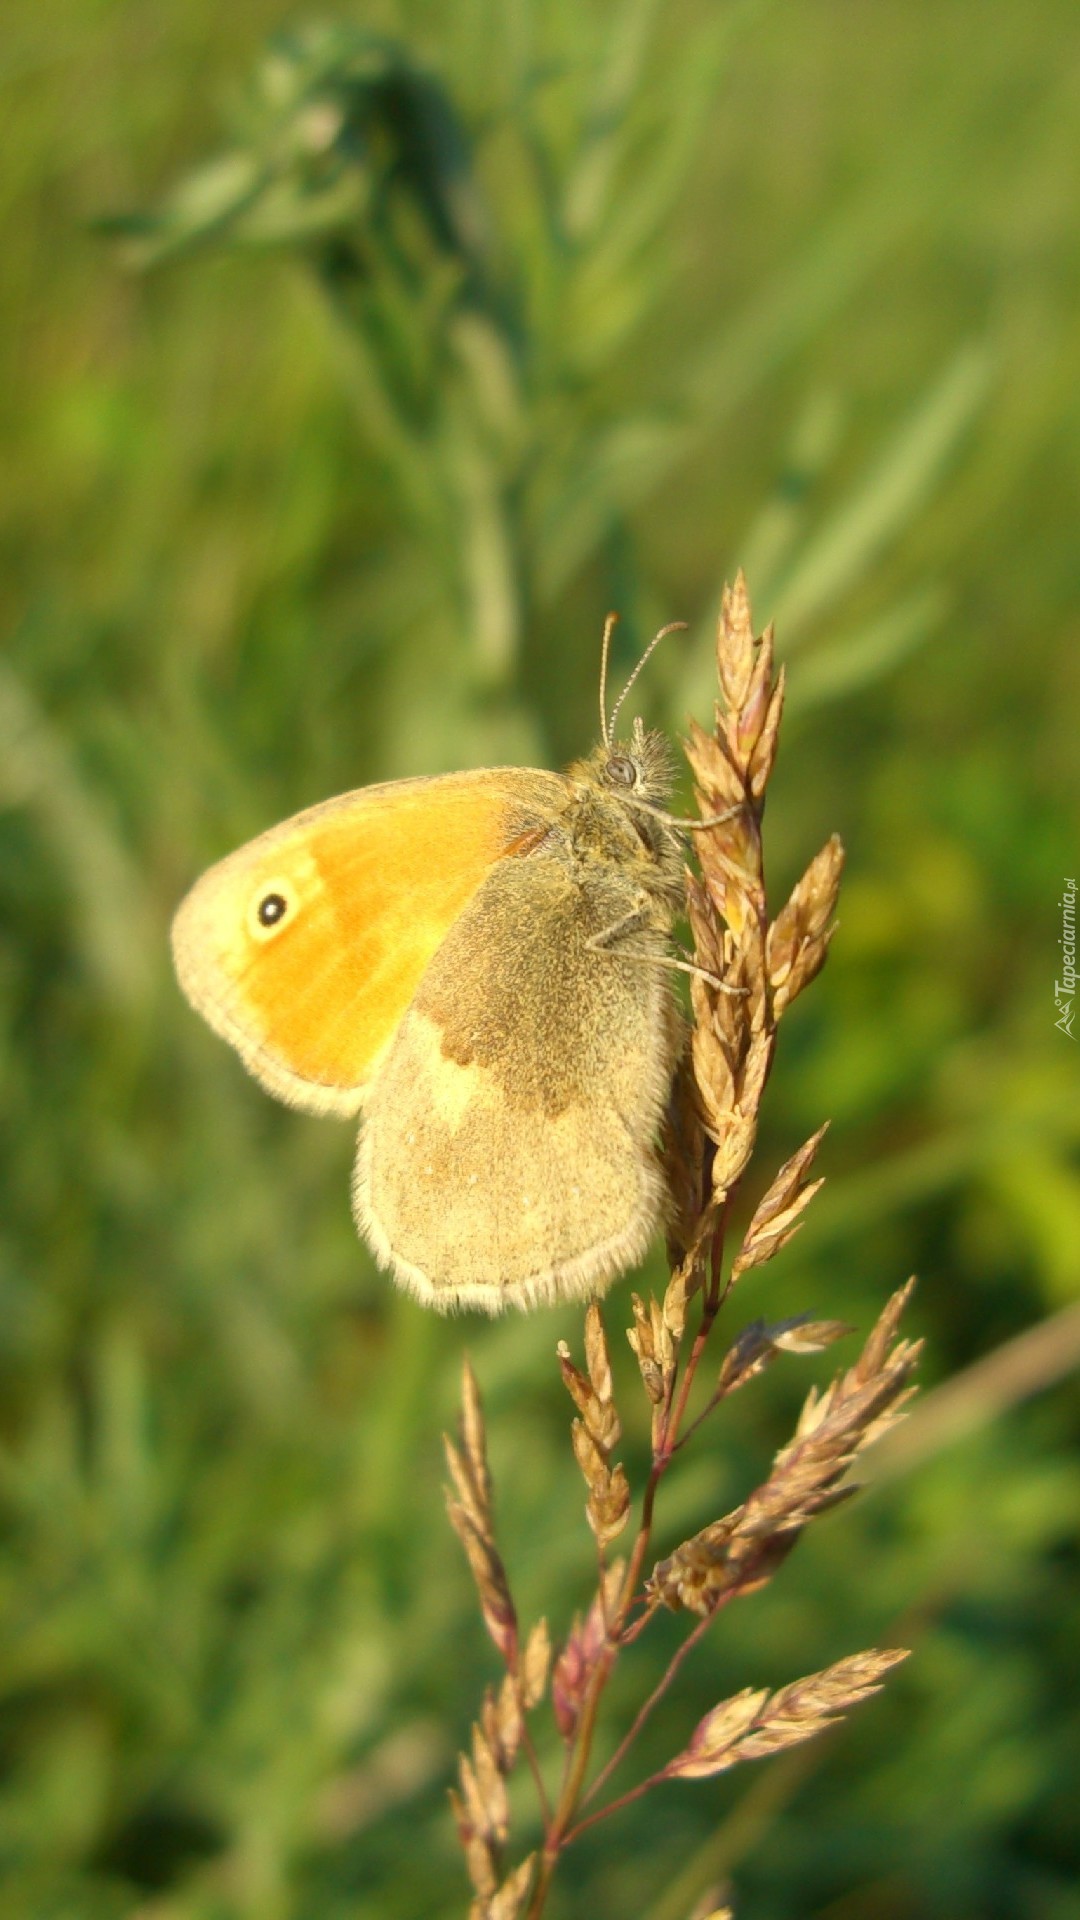 Motyl na źdźble trawy